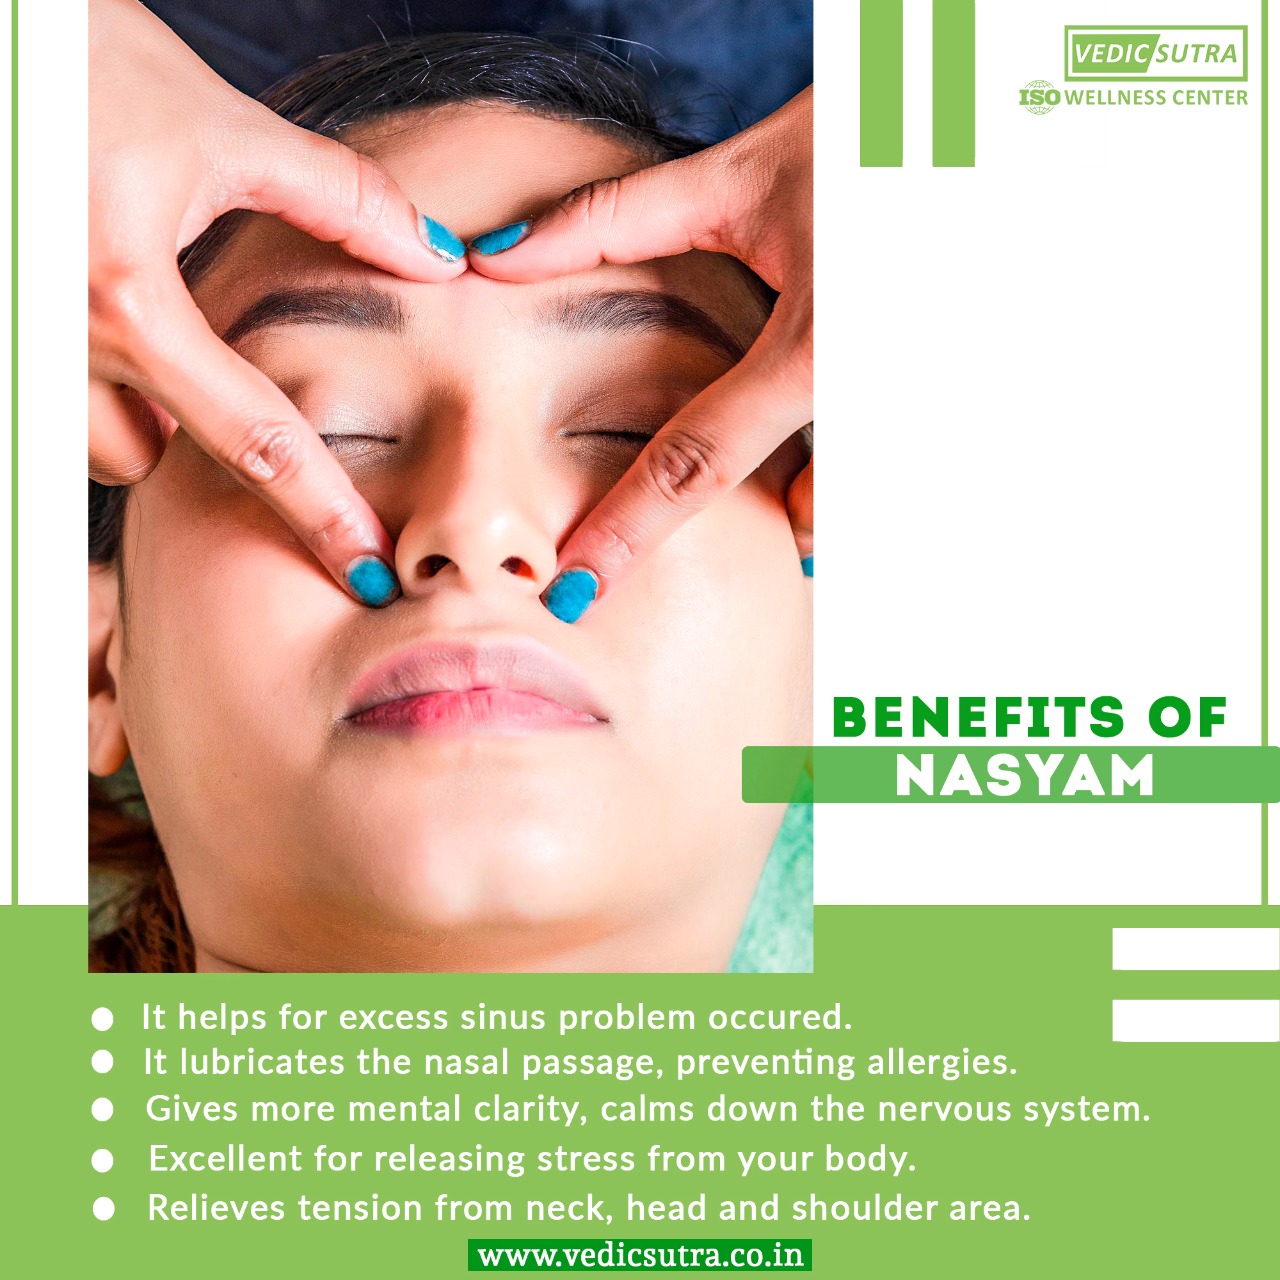 Benefits of Nasyam Therapy